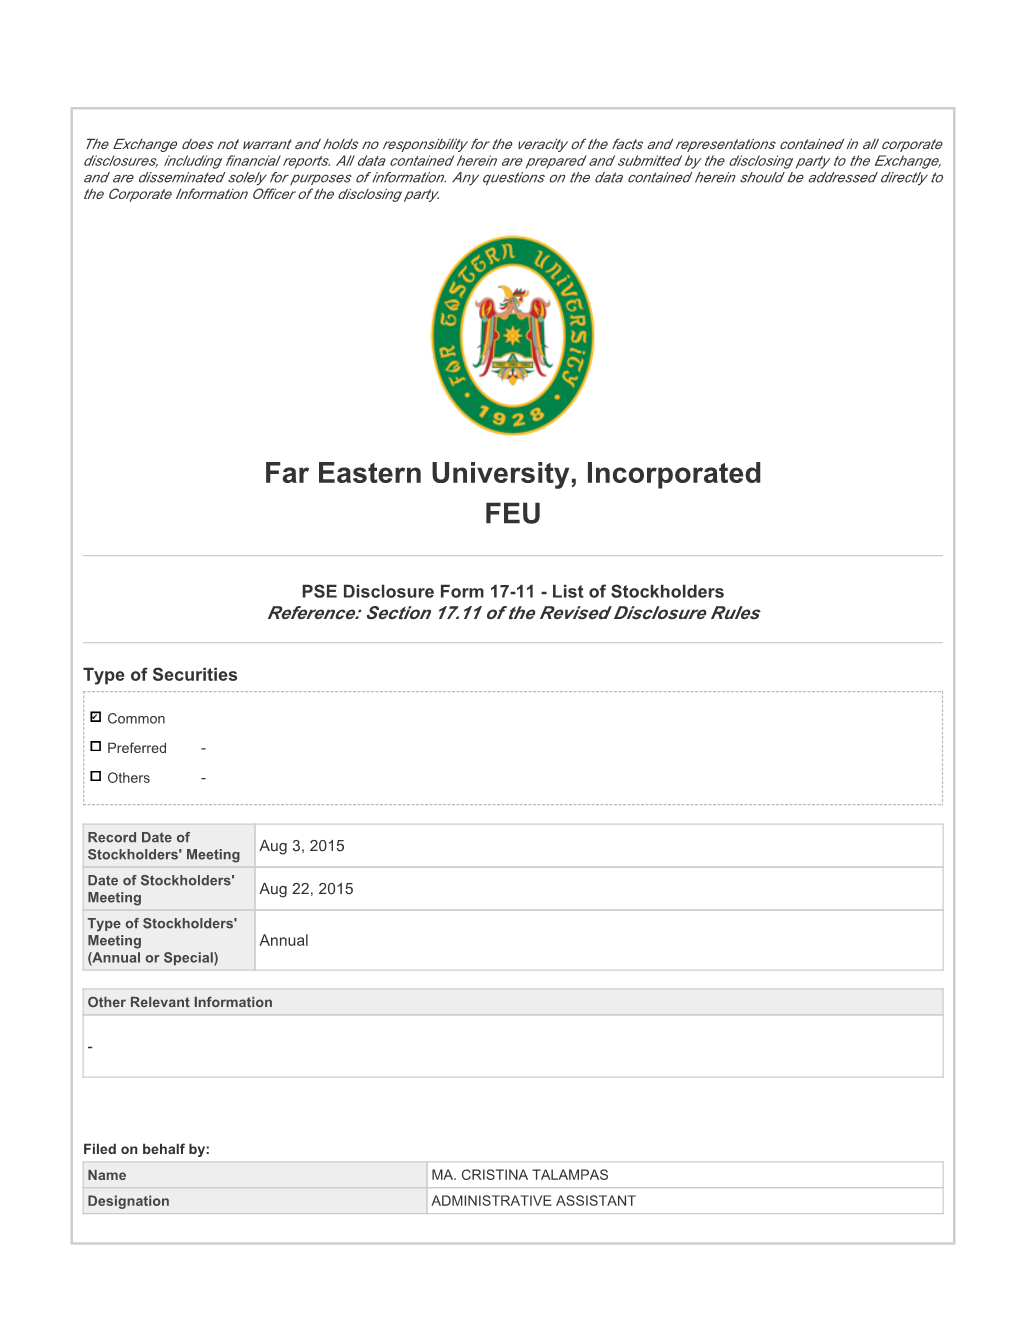 Far Eastern University, Incorporated FEU